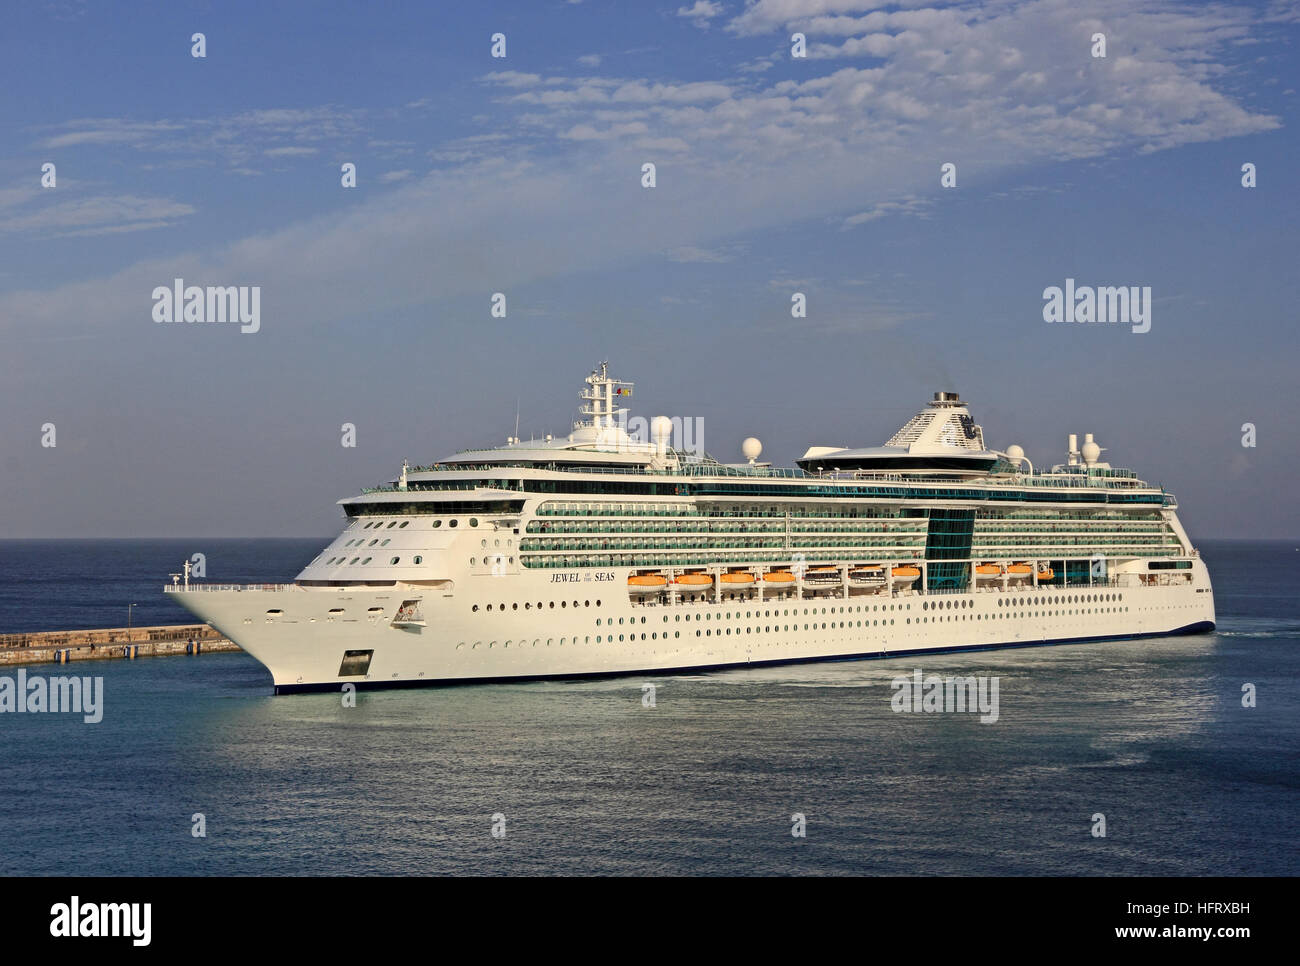 Royal Caribbean International cruise ship 'Jewel of the Seas' entering harbour, Bridgetown, Barbados Stock Photo